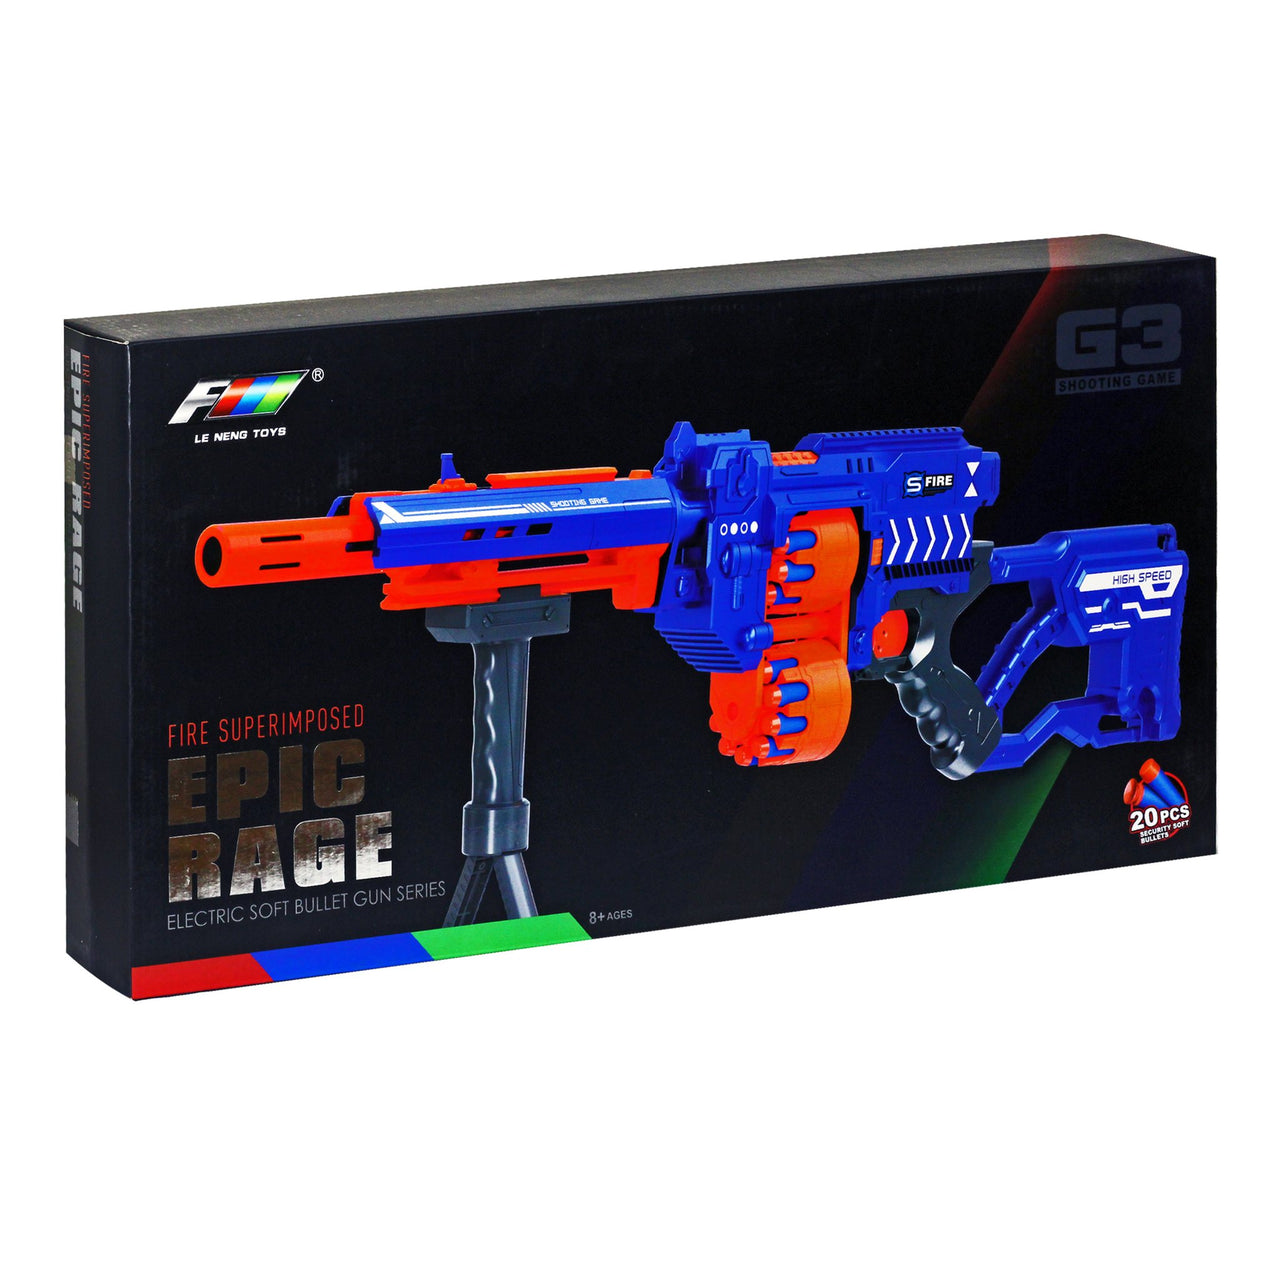 Epic Rage G3 Soft Bullet Gun